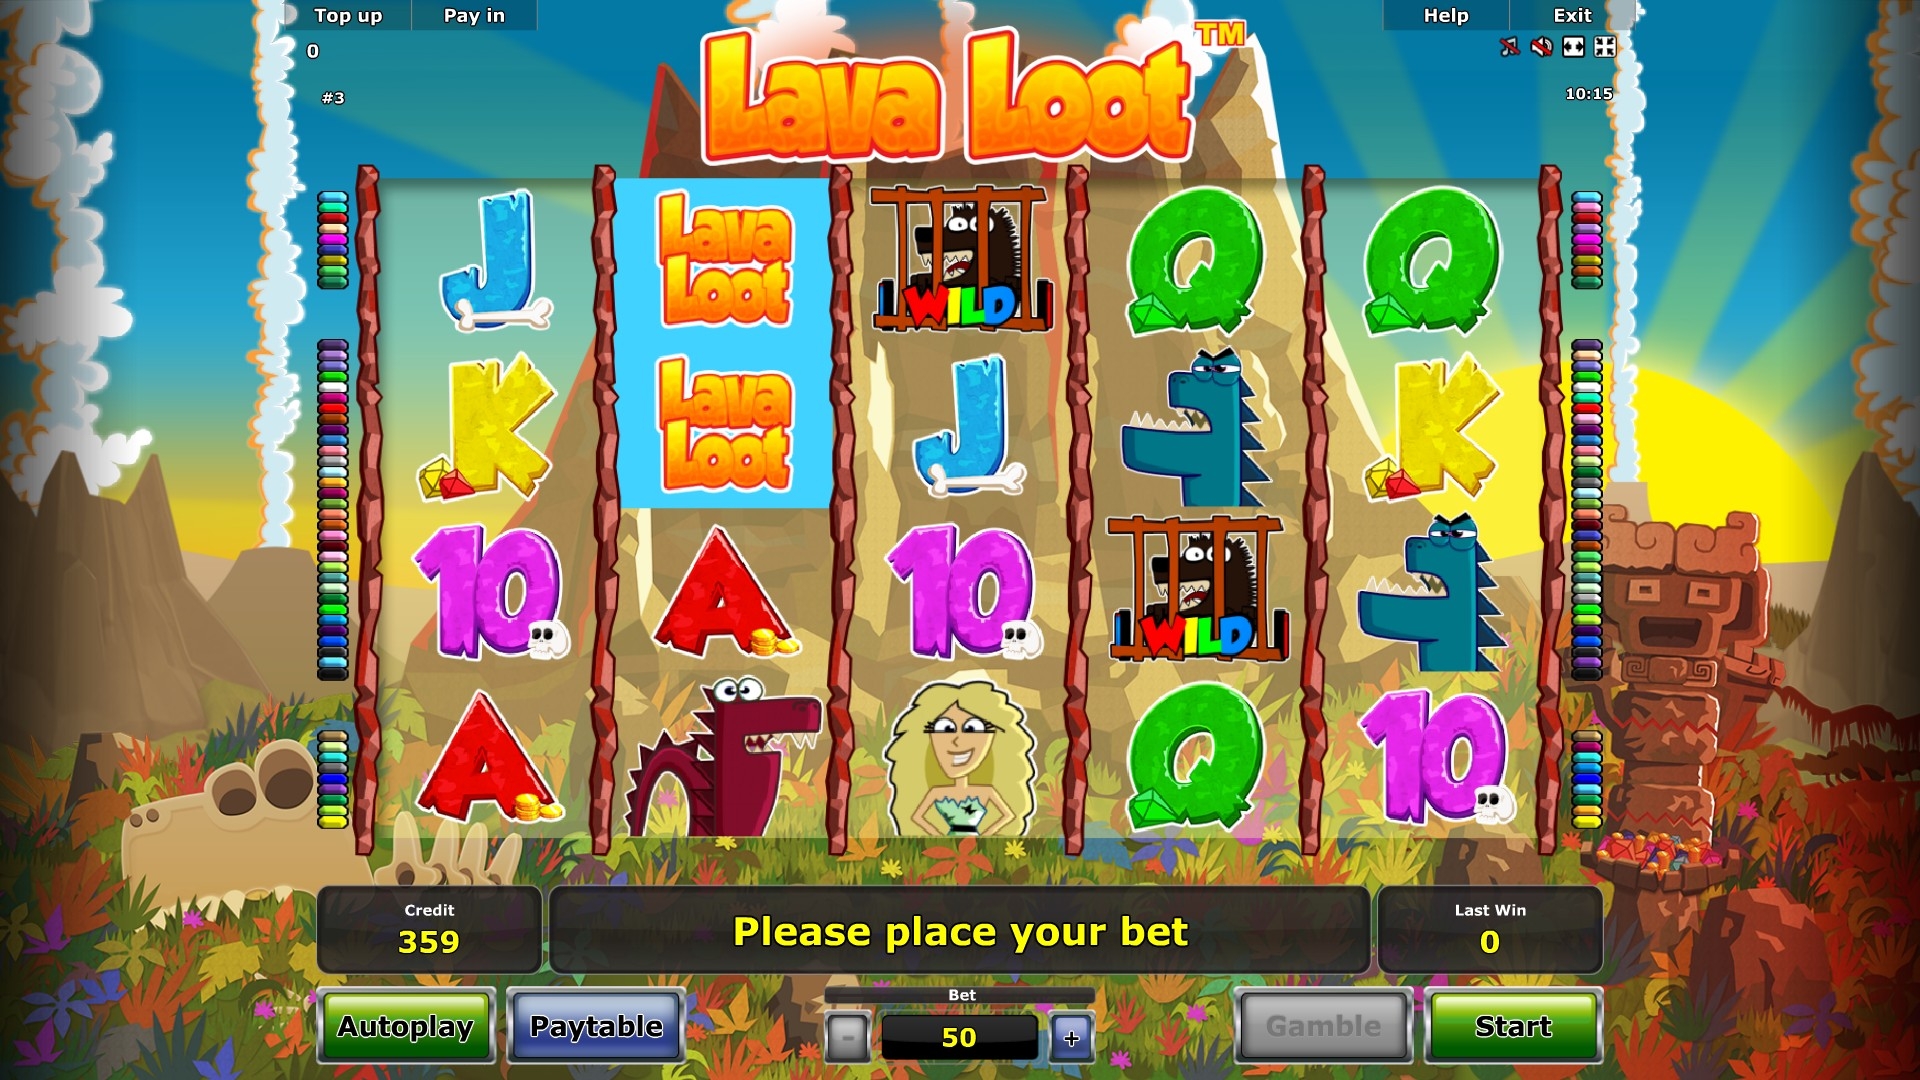 Lava Loot (Lava Loot) from category Slots